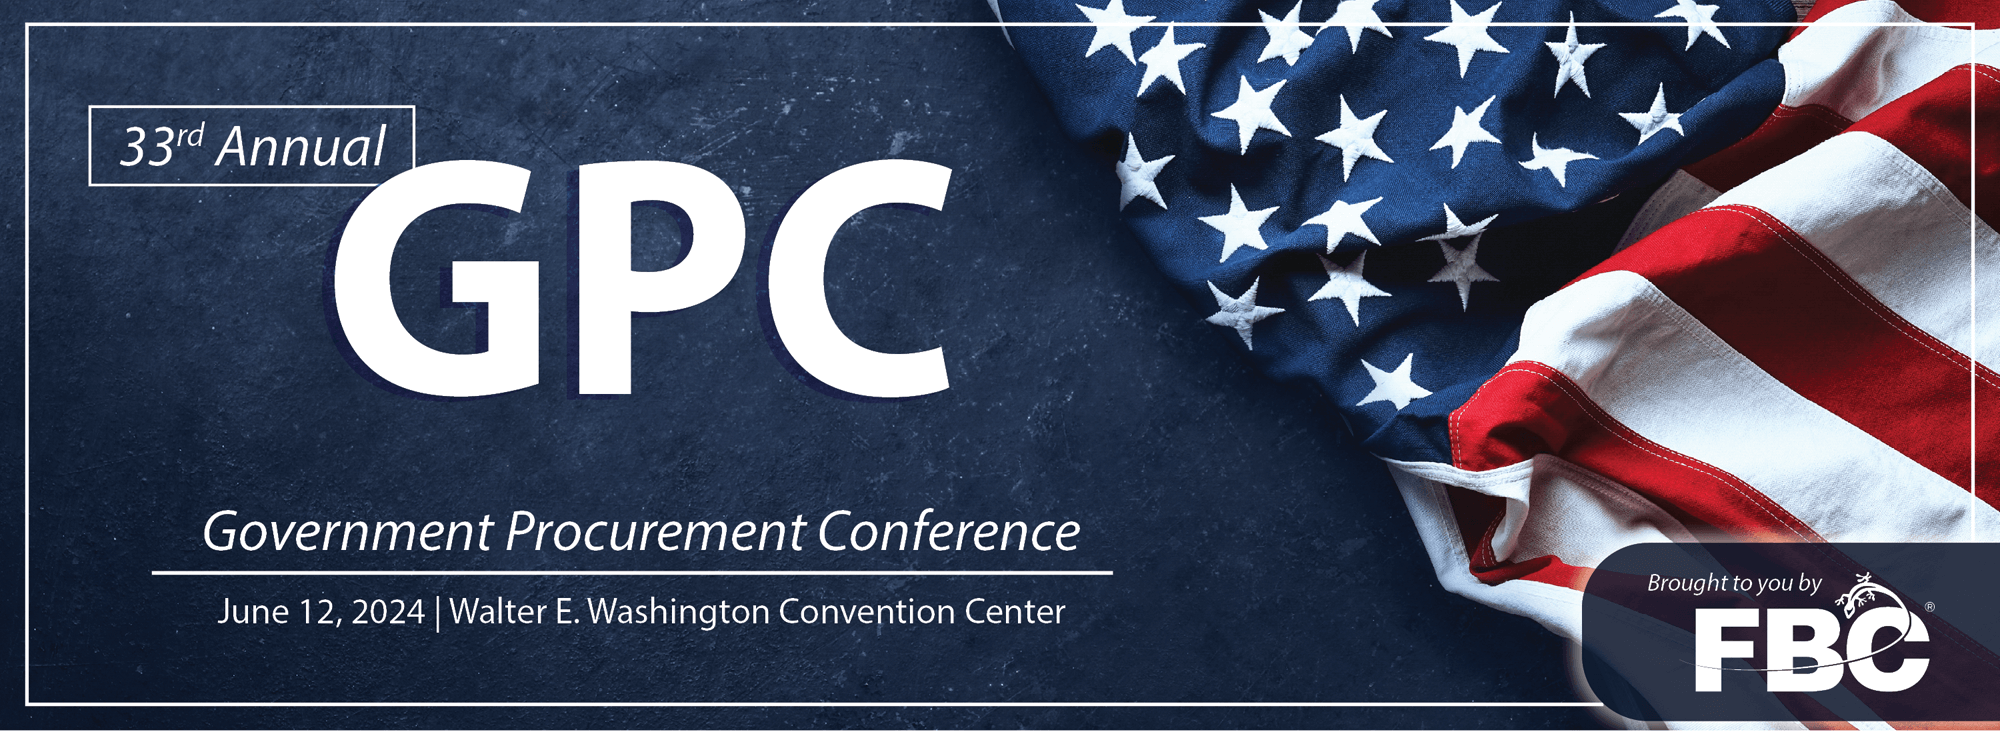 31st Annual Government Procurement Conference (GPC)